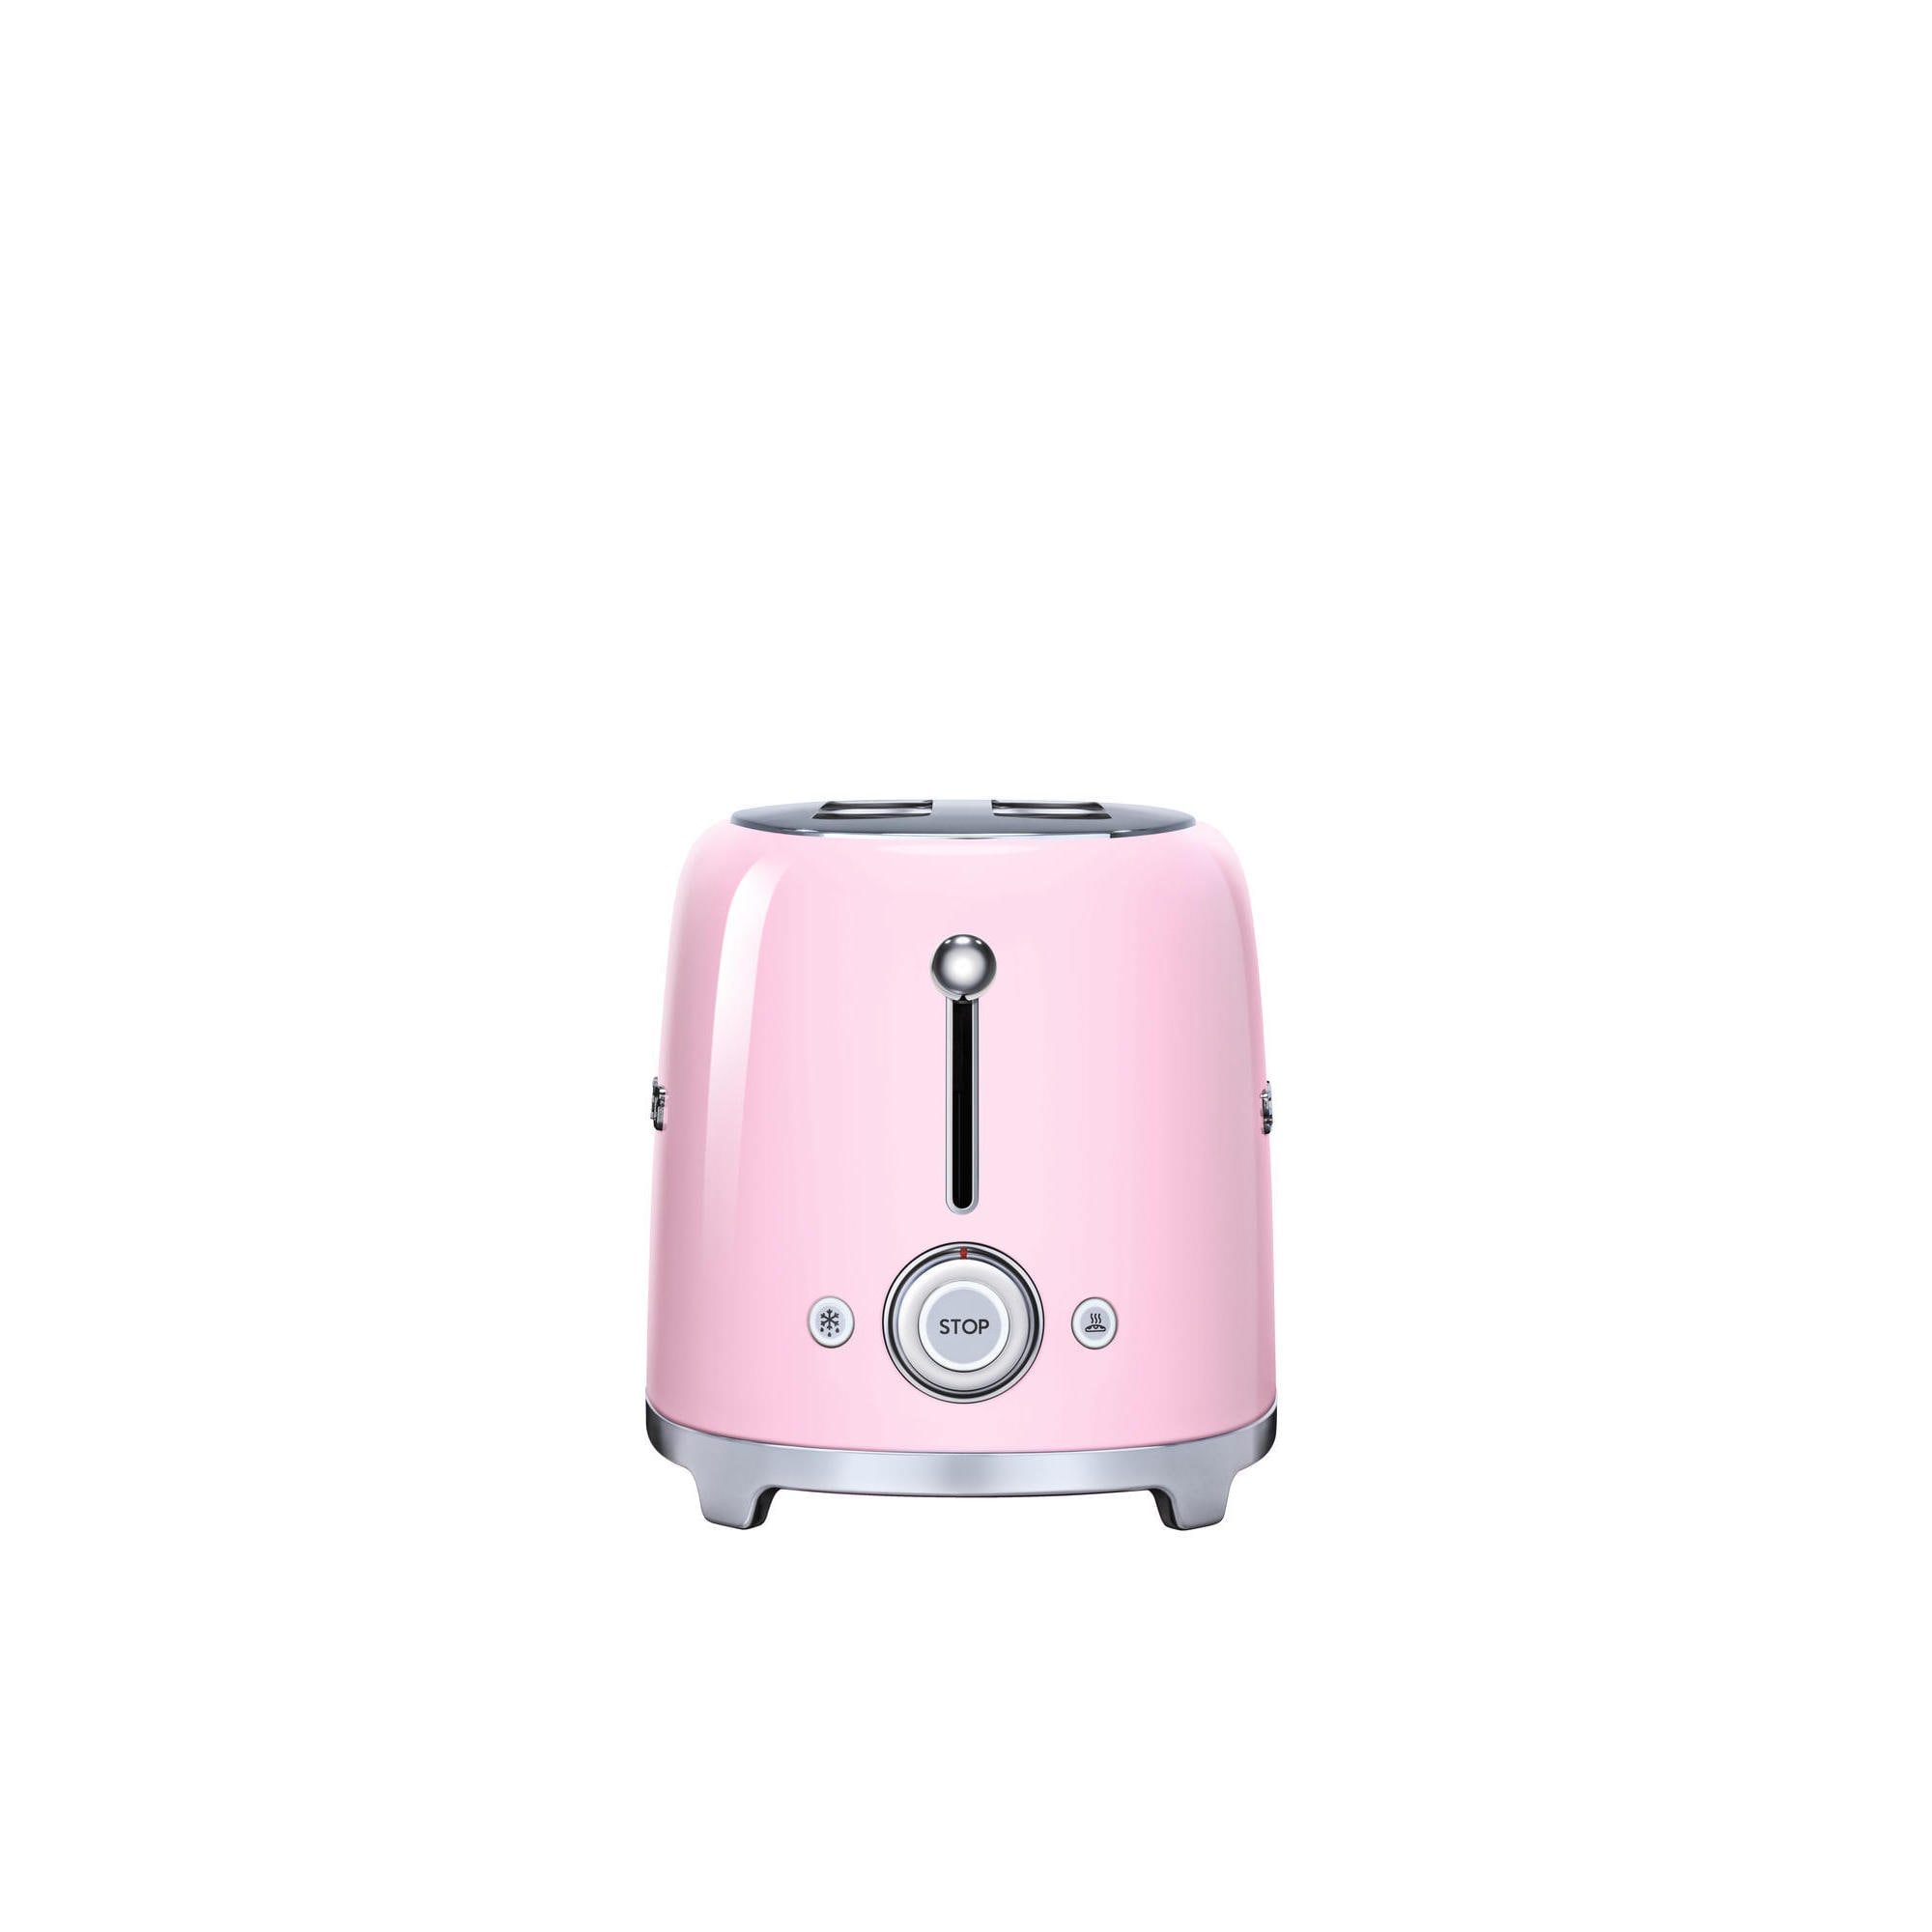 https://ak1.ostkcdn.com/images/products/14778487/Smeg-50s-Style-4-Slice-Toaster-Pink-9509cf5a-9f00-40ef-9ae2-d86da3dcdc49.jpg